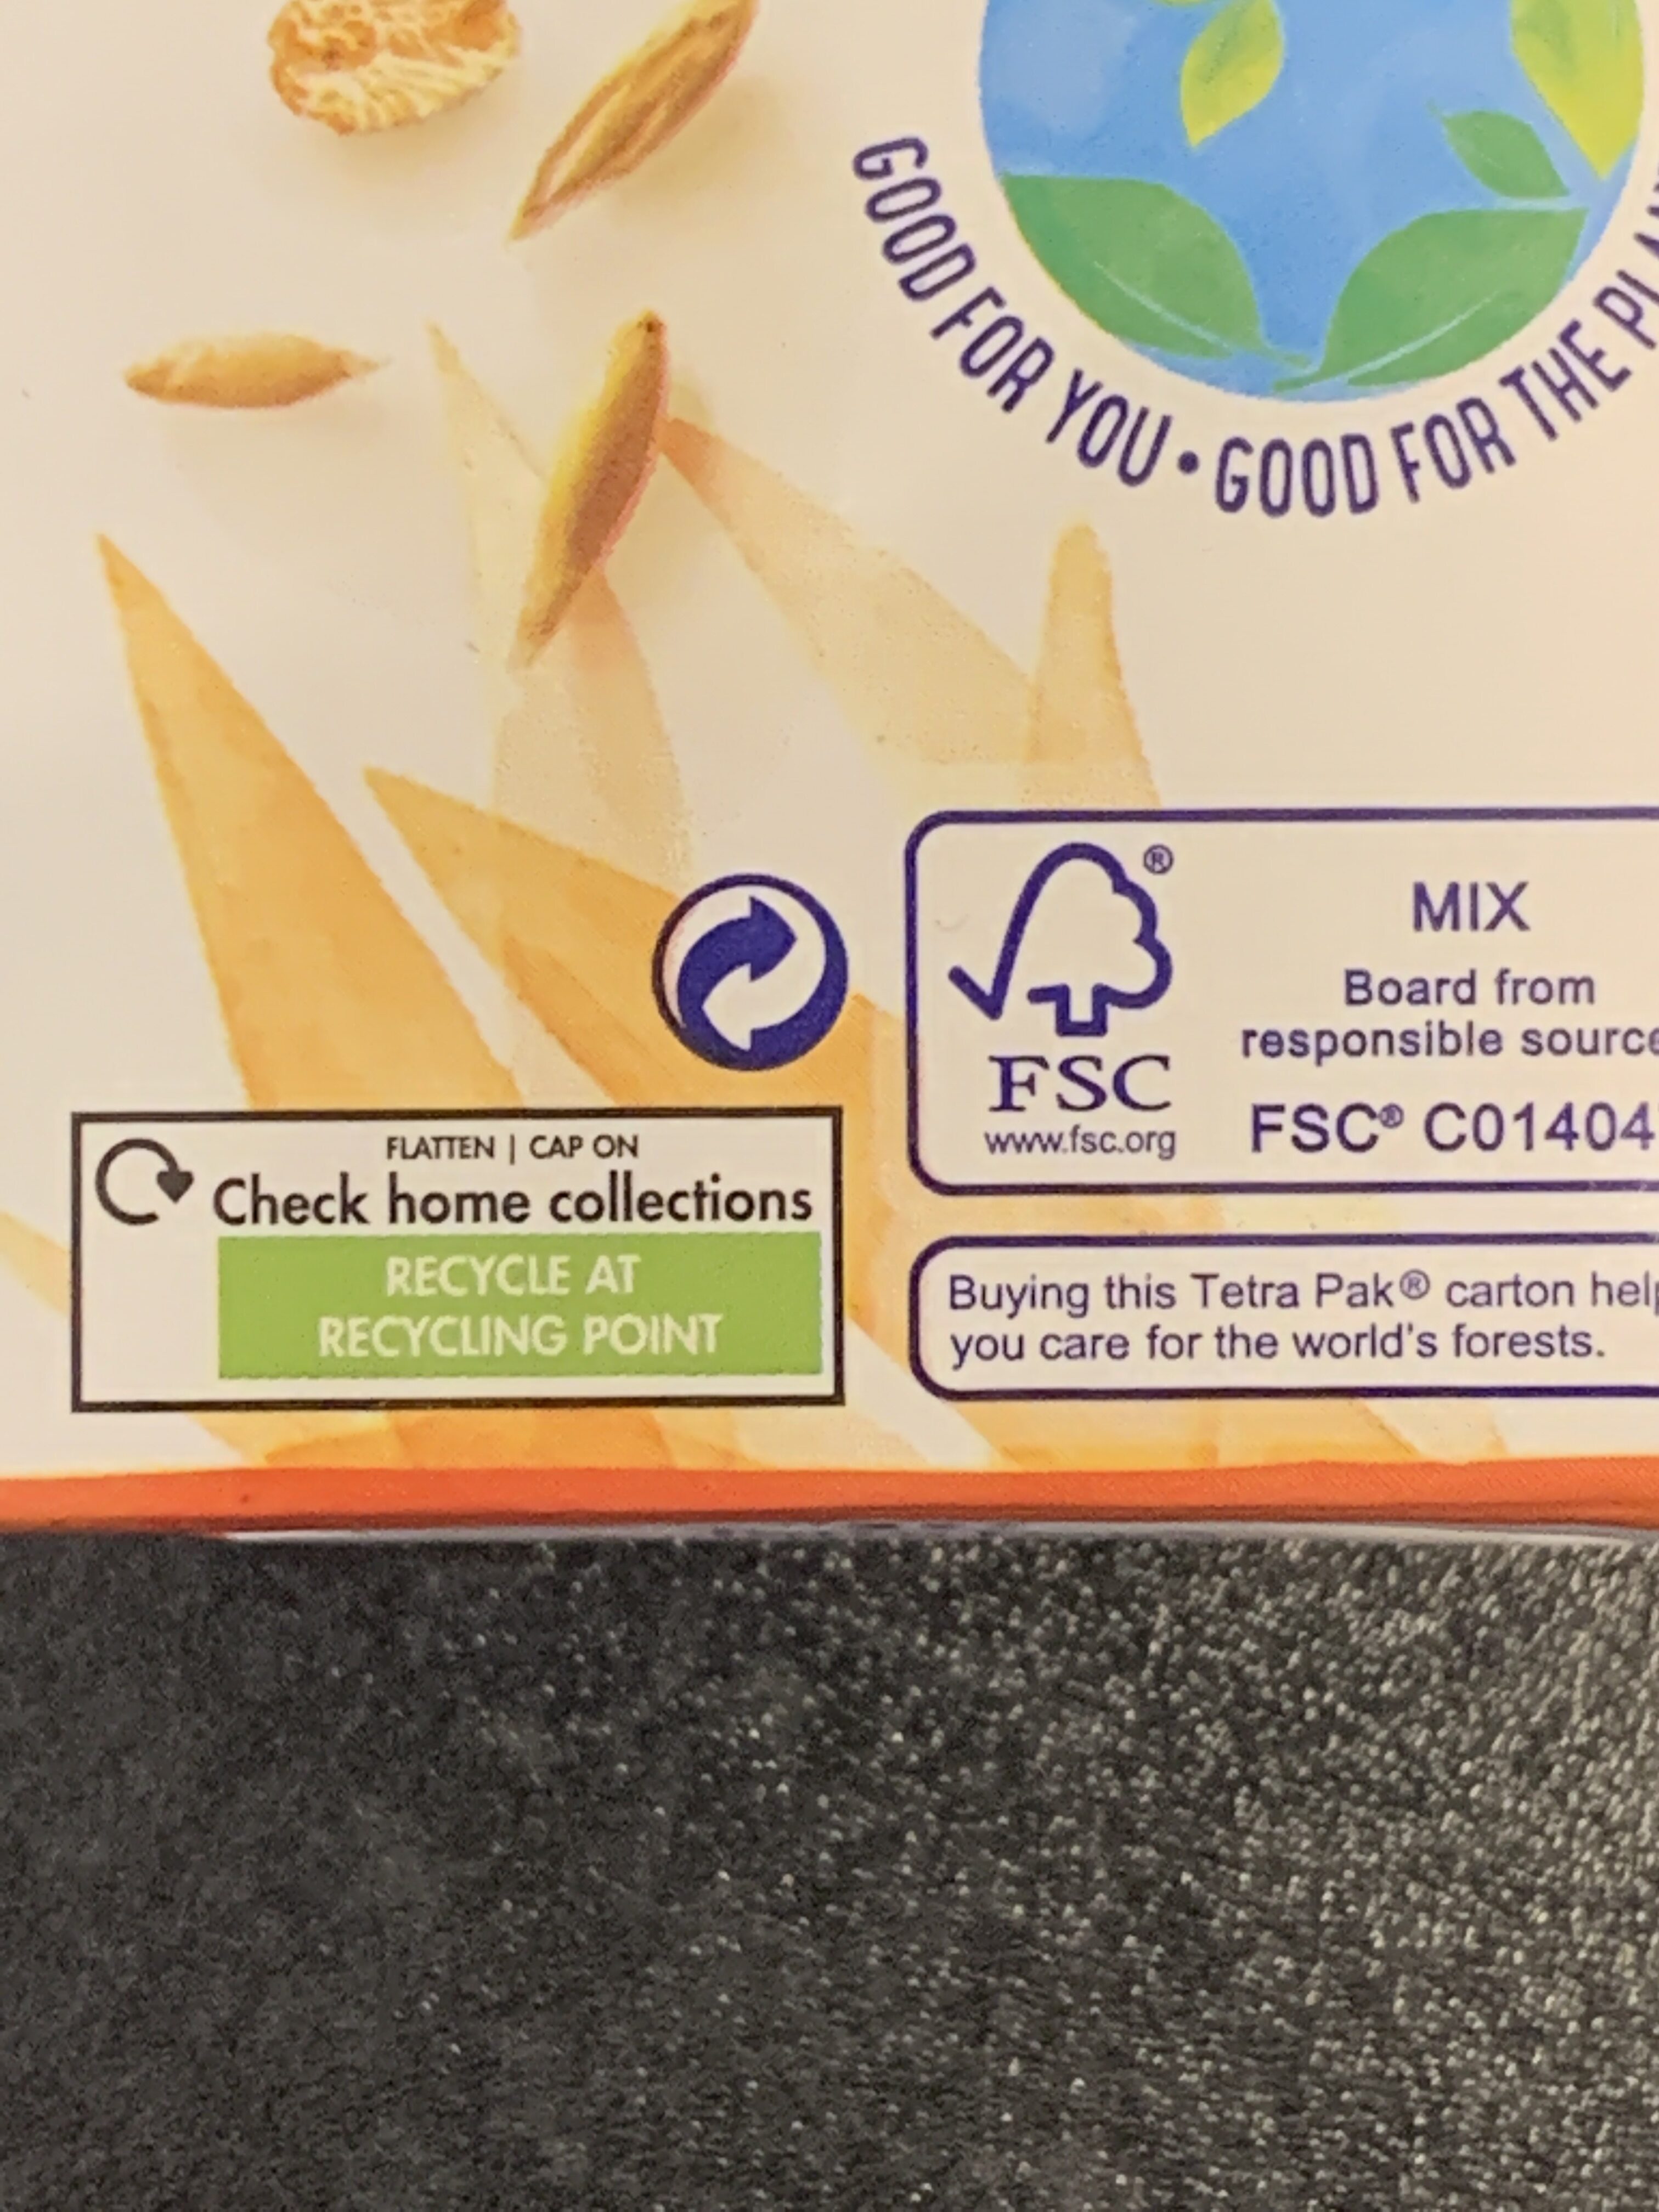 Hafermilch ohne Zucker - Instruction de recyclage et/ou informations d'emballage - de